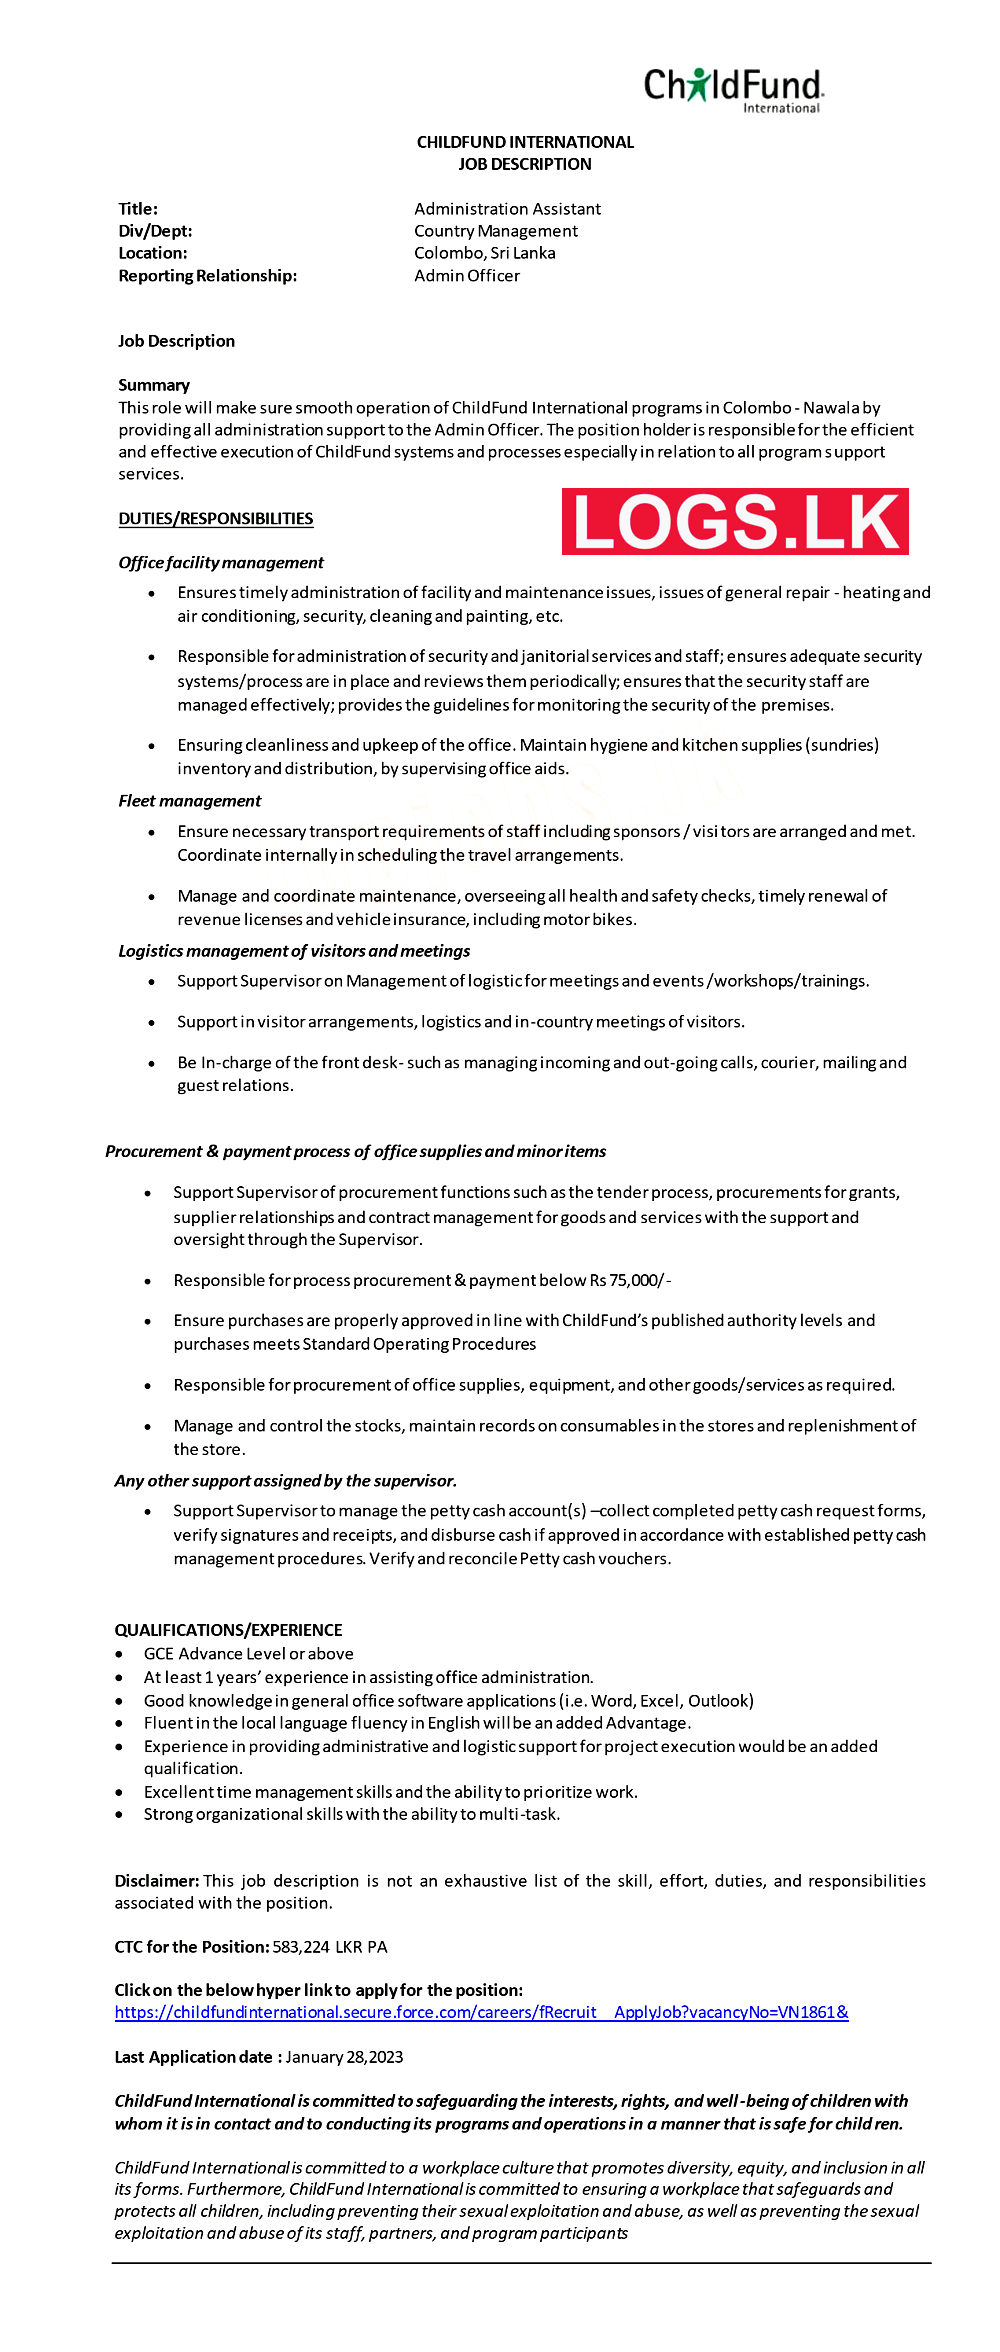 Administration Assistant - ChildFund Sri Lanka Vacancies 2023 Application Form, Details Download